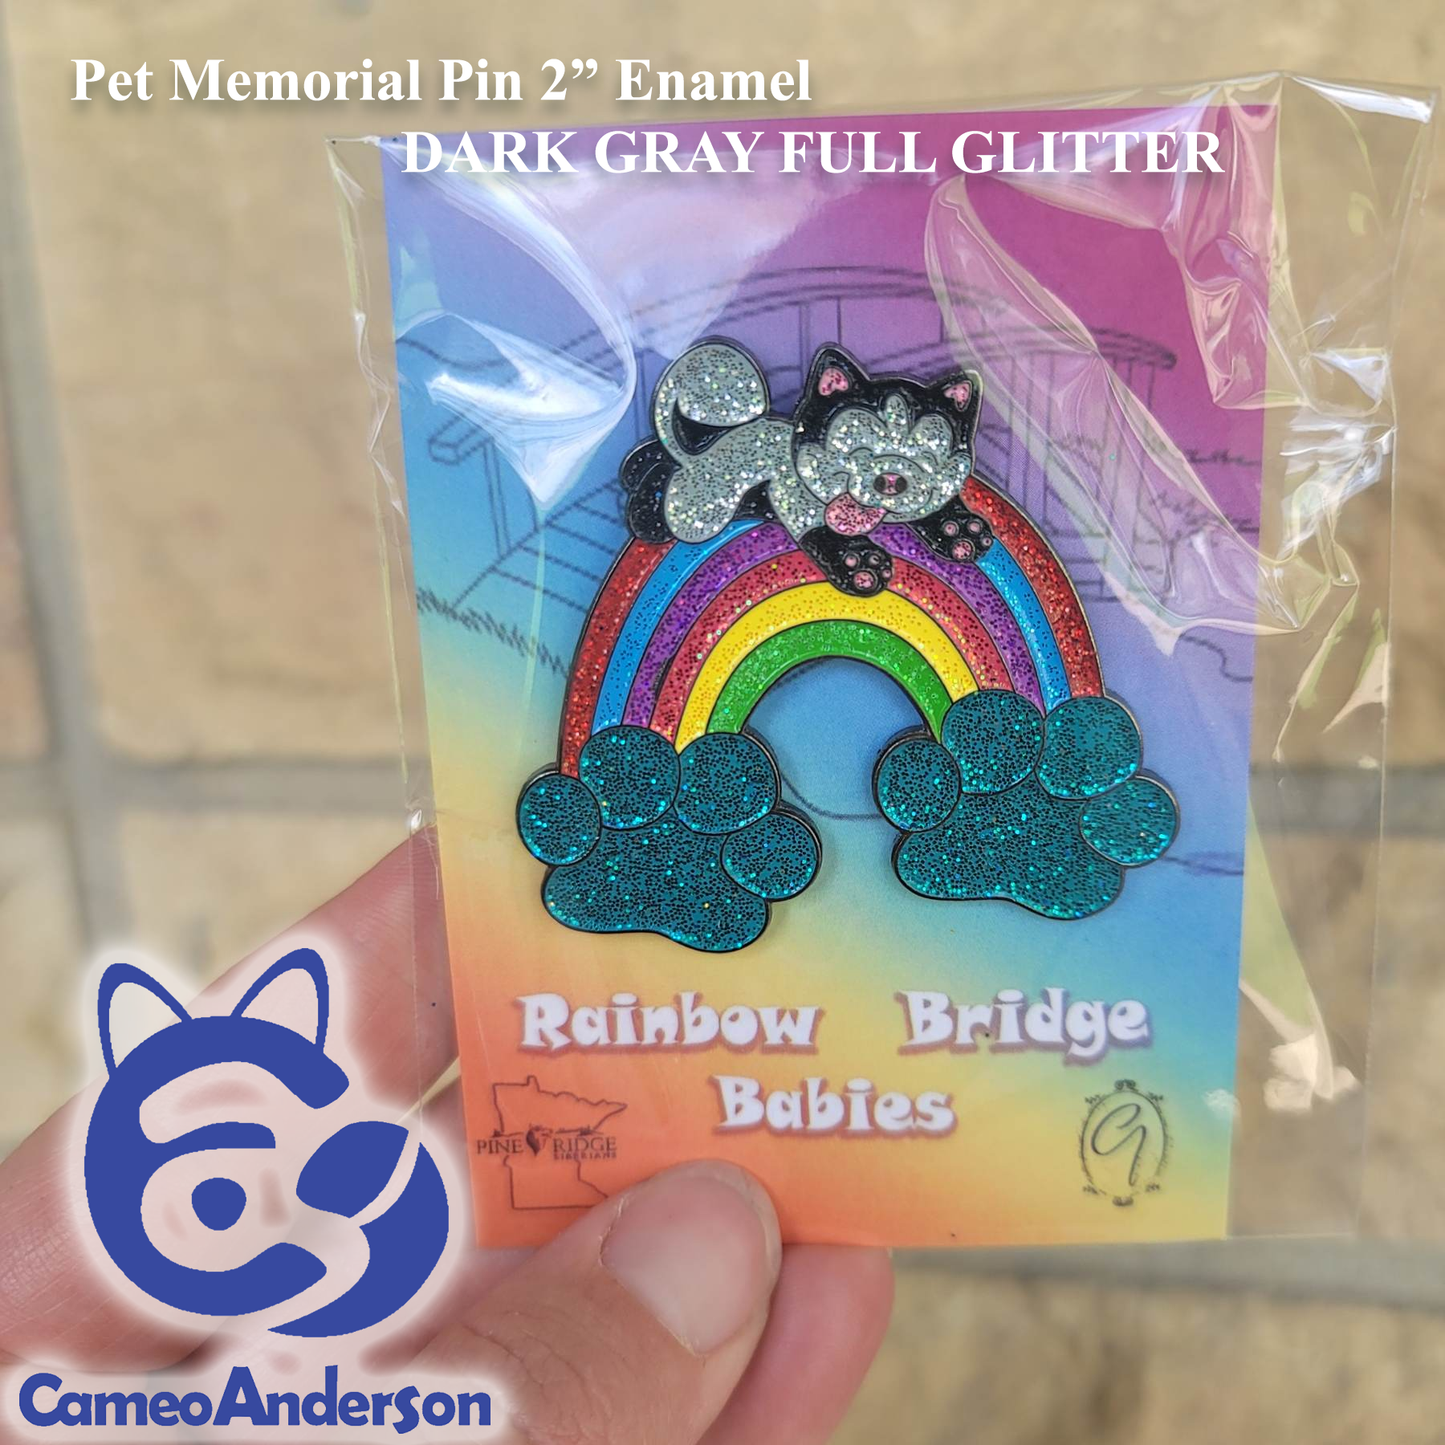 Rainbow Bridge Babies - Collectible Wearable Pet Memorial Pins || Cameo Anderson & Pine Ridge Siberians